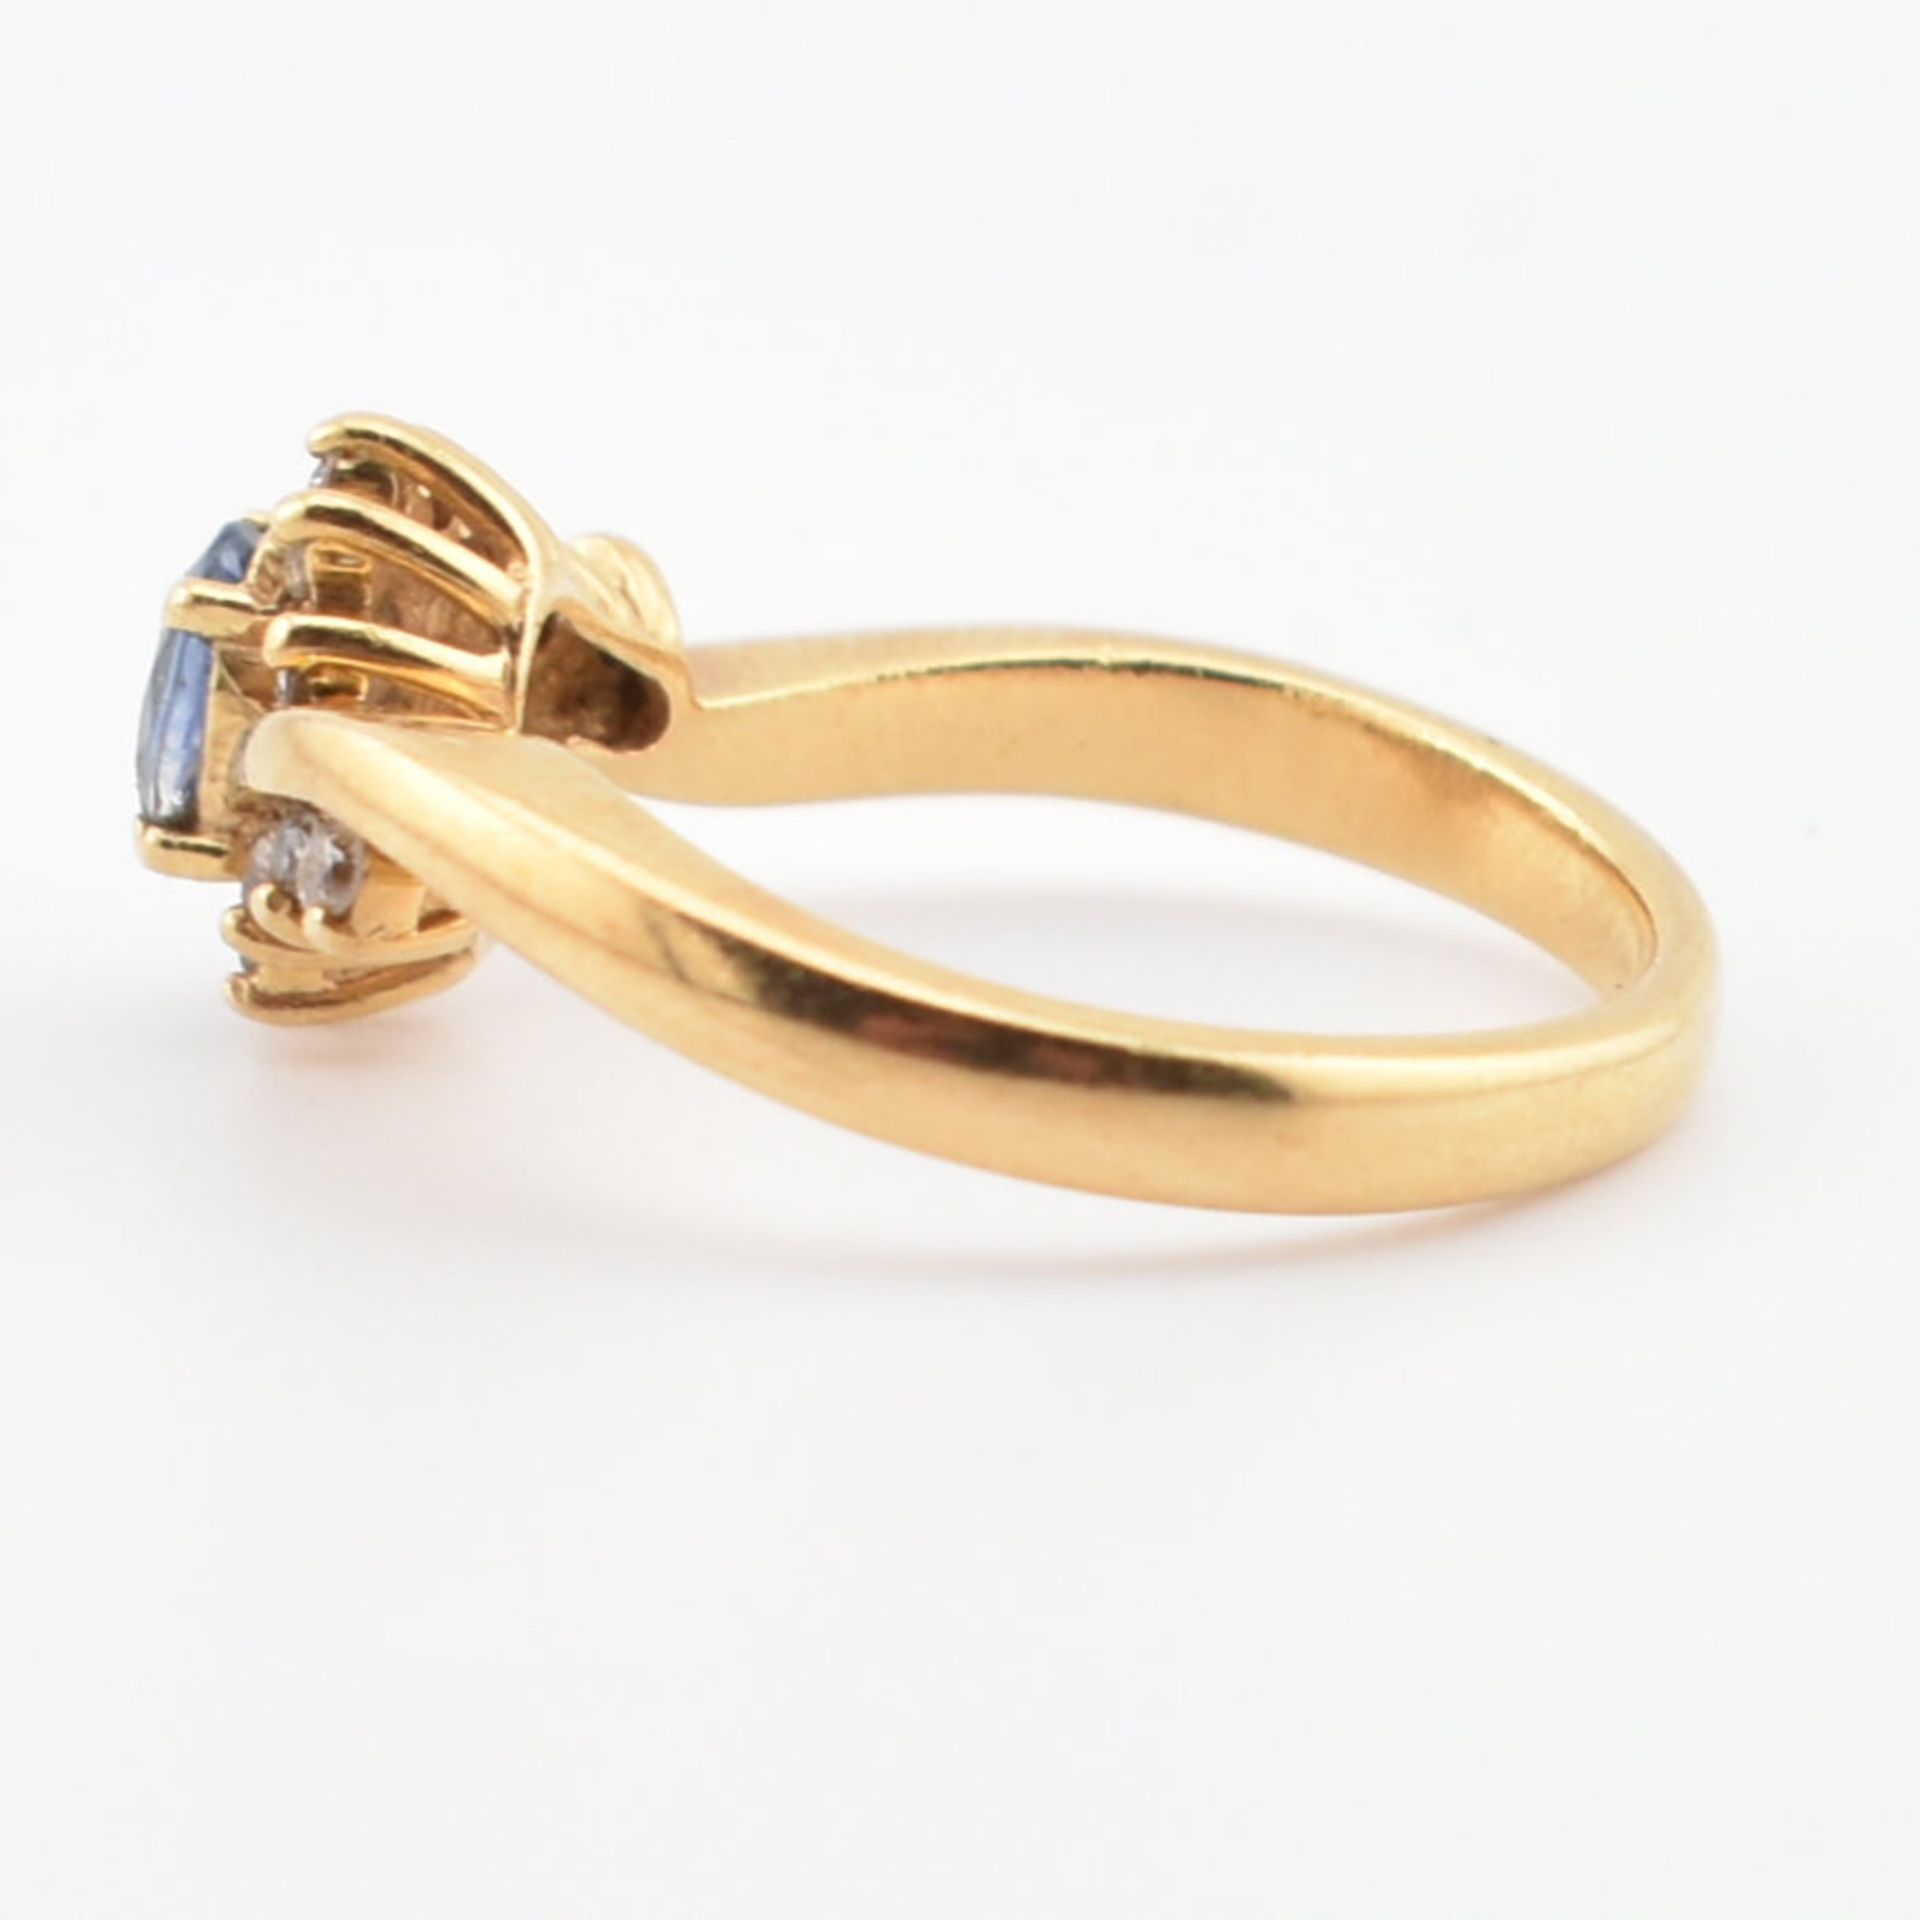 HALLMARKED 18CT GOLD CEYLON SAPPHIRE & DIAMOND RING - Image 4 of 8